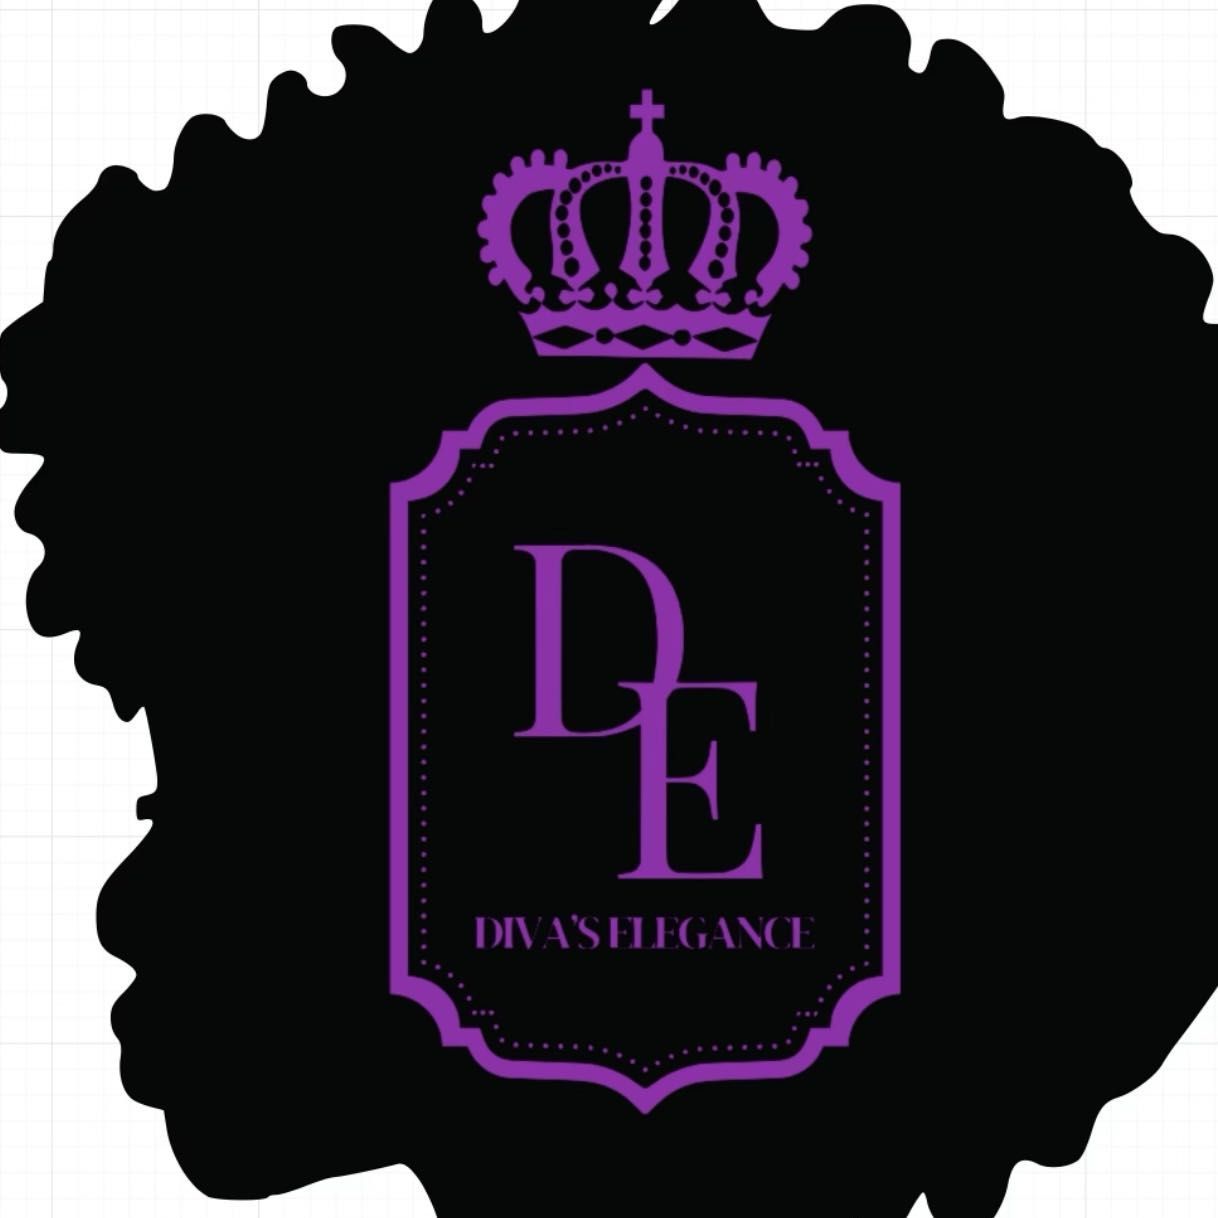 Divas Elegance, 284 main st, Booth 2, Booth #9, Brockton, 02301